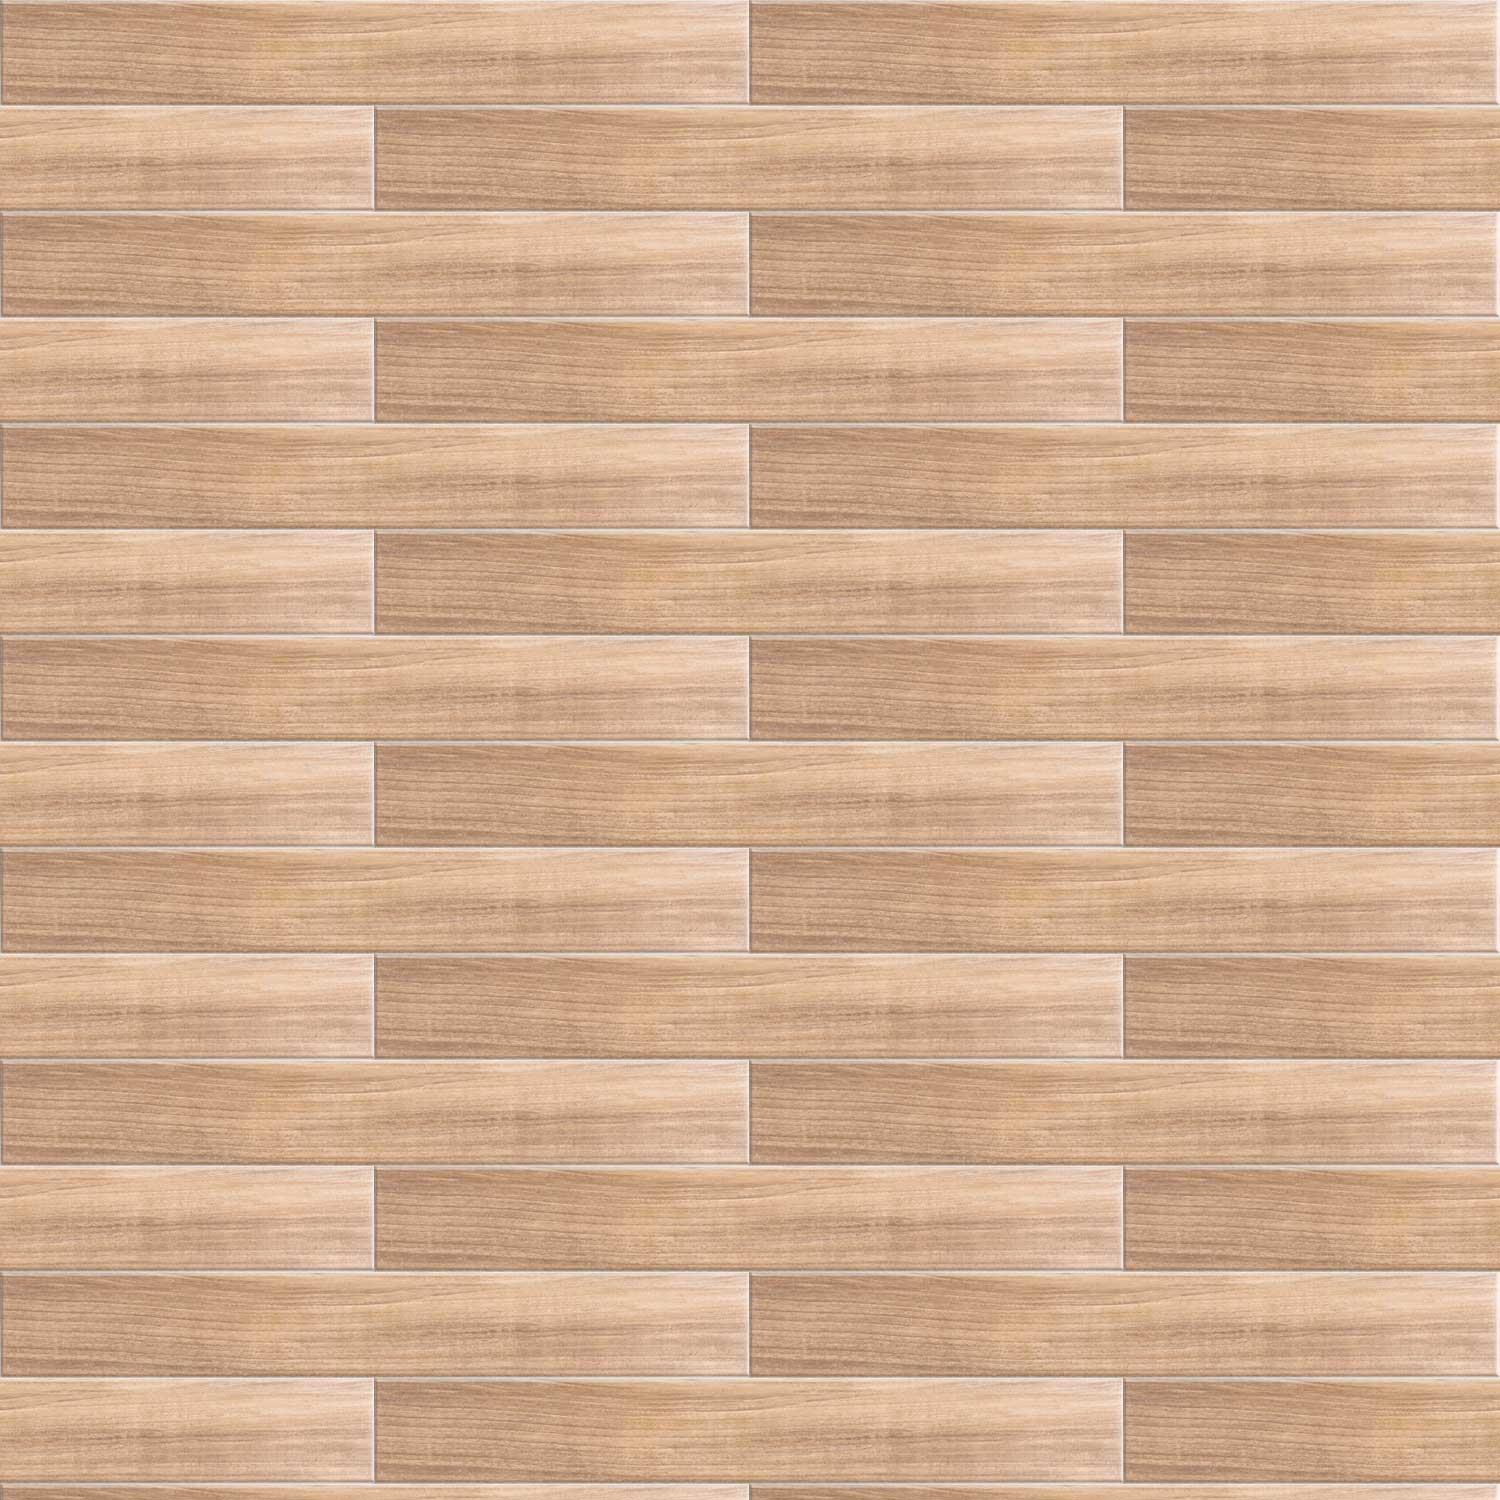 Forest Oak Porcelain Plank Tile Walls Floor R9 Wood Effect 100x700mm